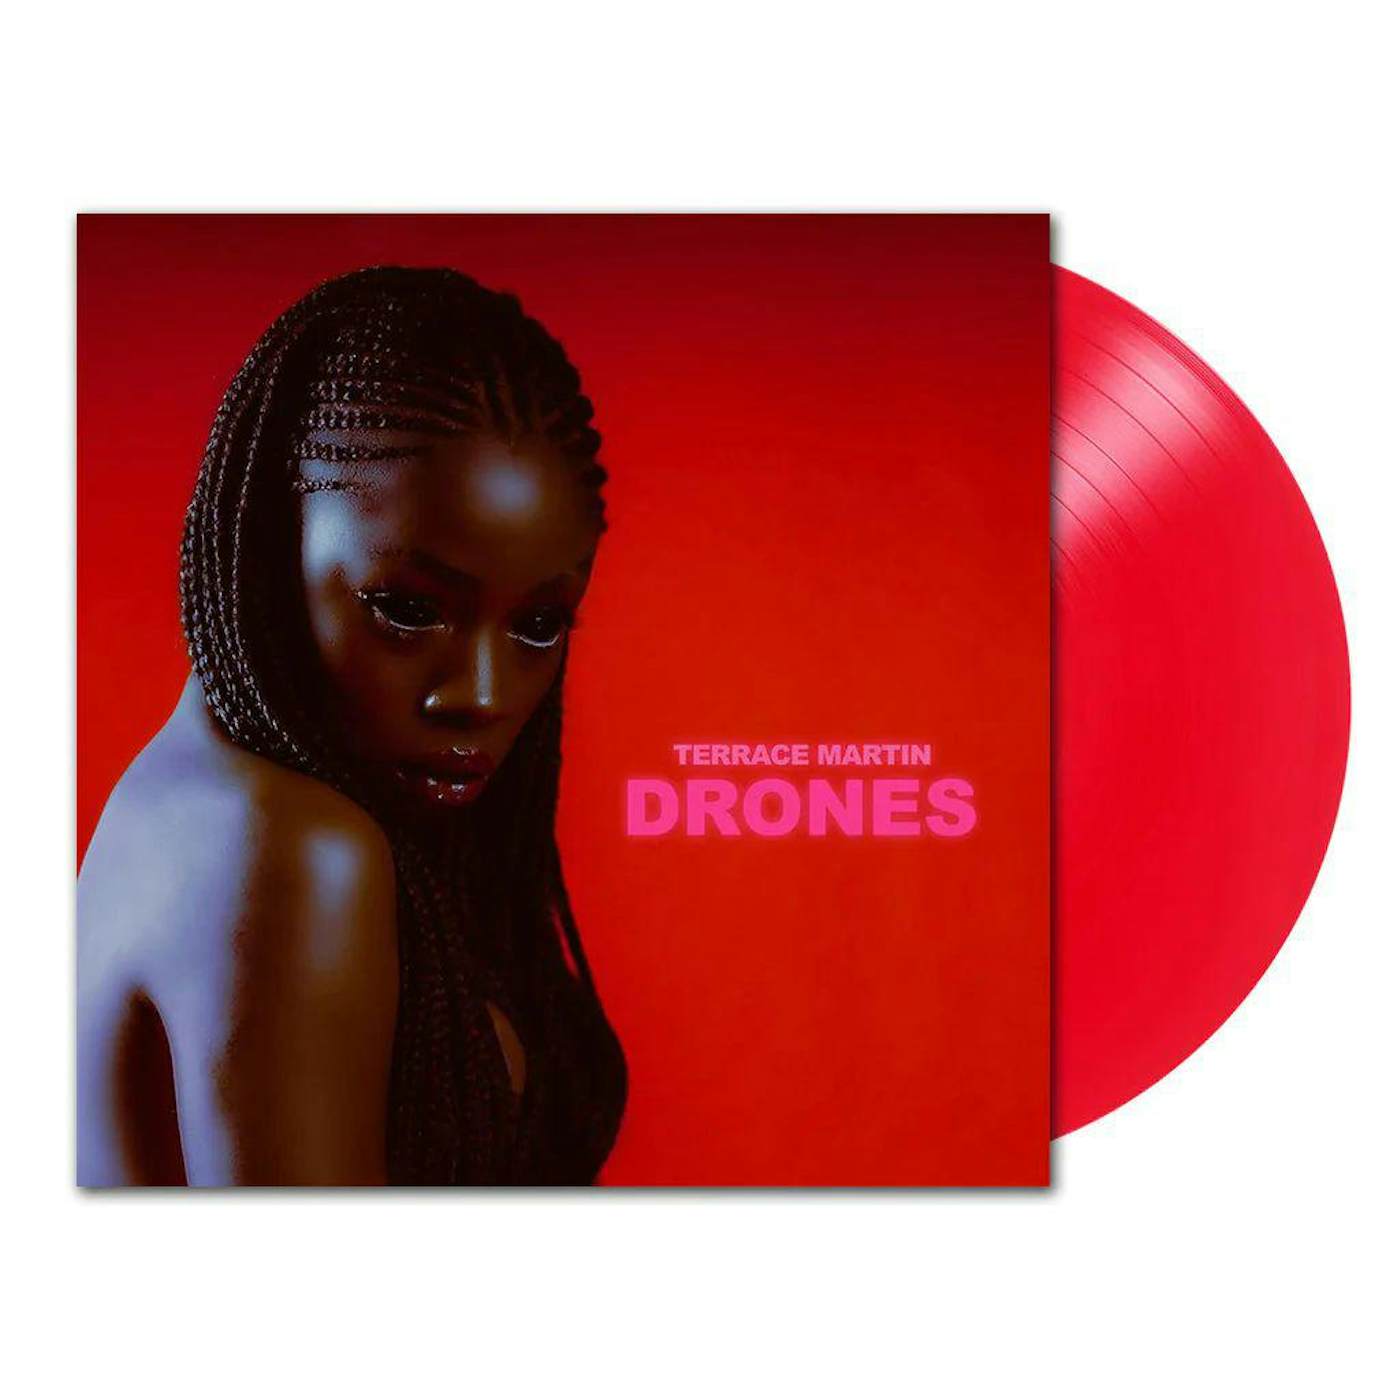 Terrace Martin Drones (Red Vinyl Record)